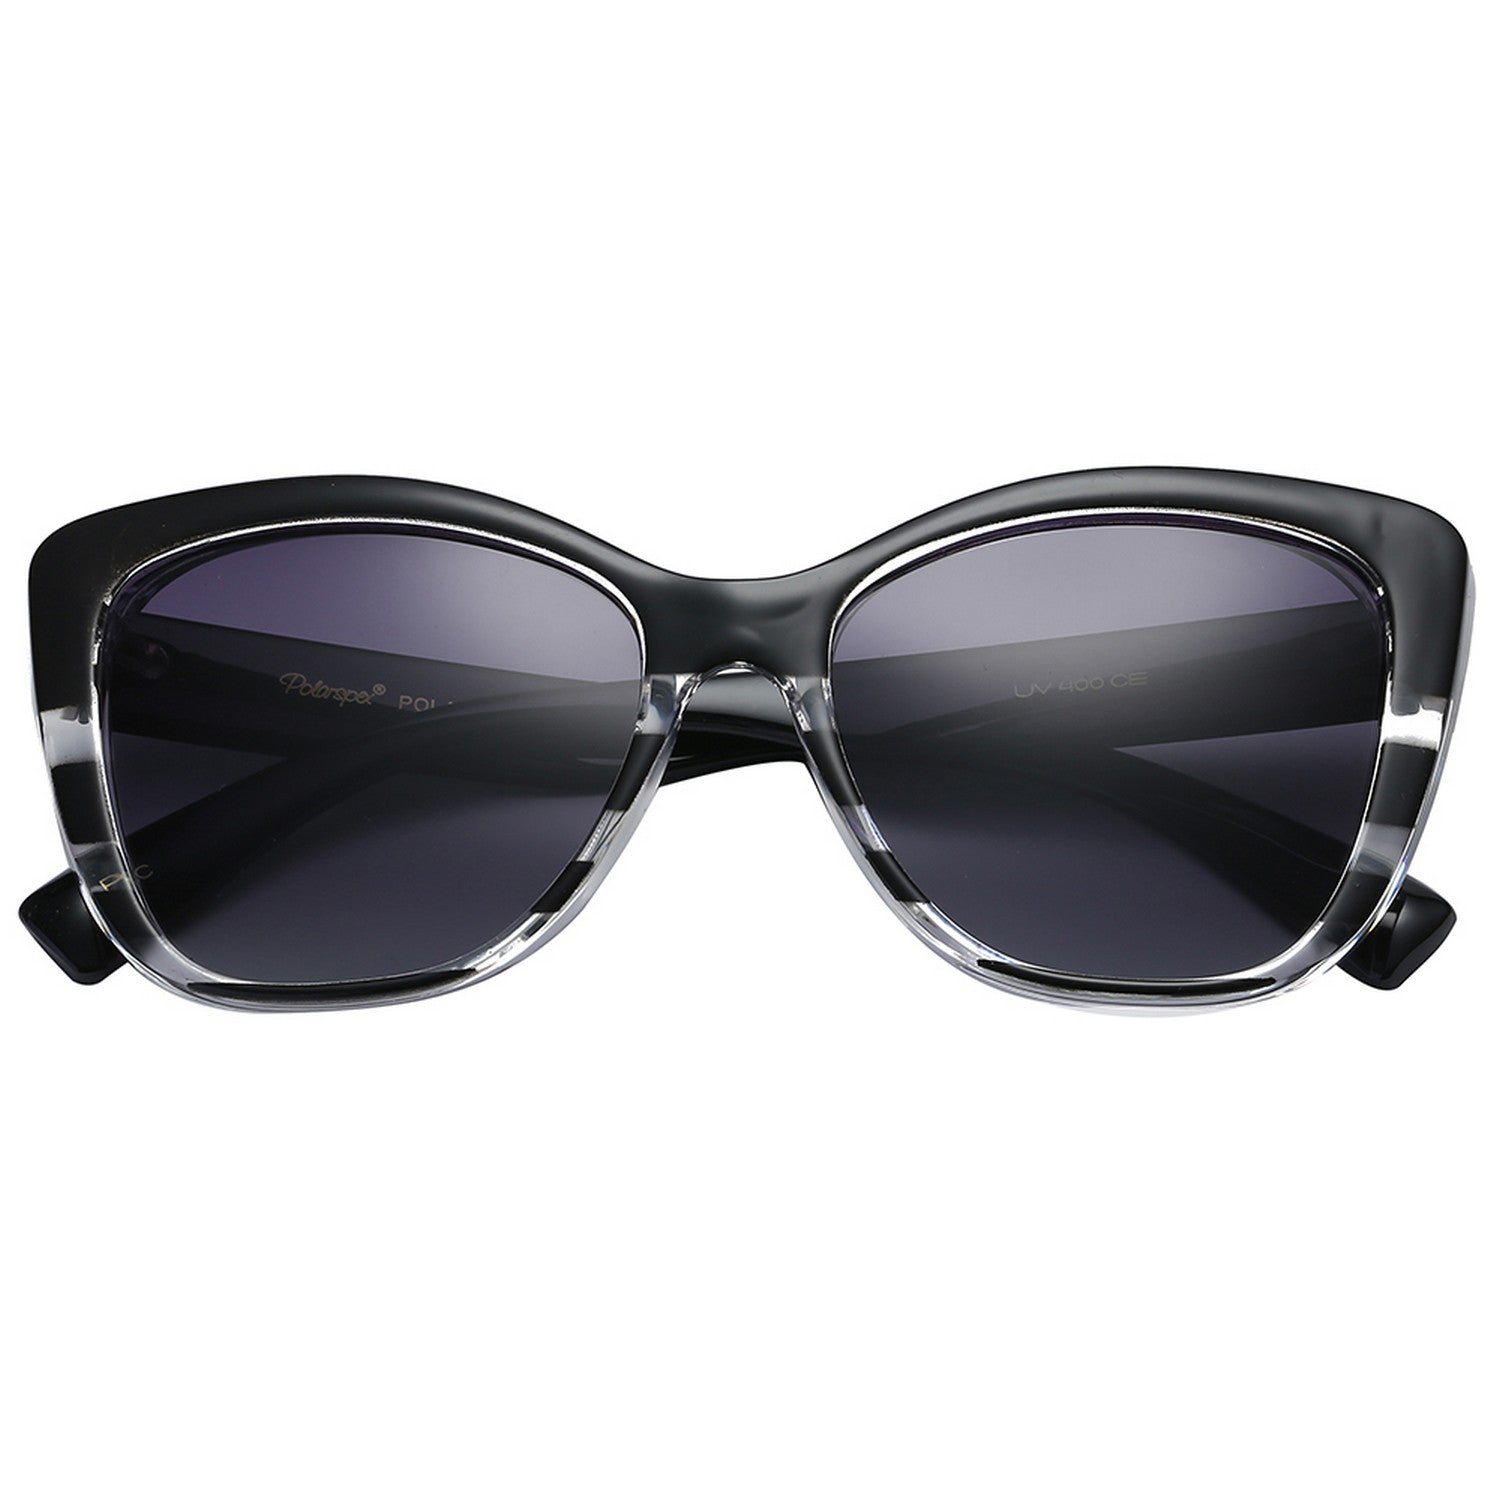 Polarspex Polarized Jackie-O Cat Eyes Style Sunglasses with Mod Stripe Frames and Polarized Gradient Smoke Lenses for Women